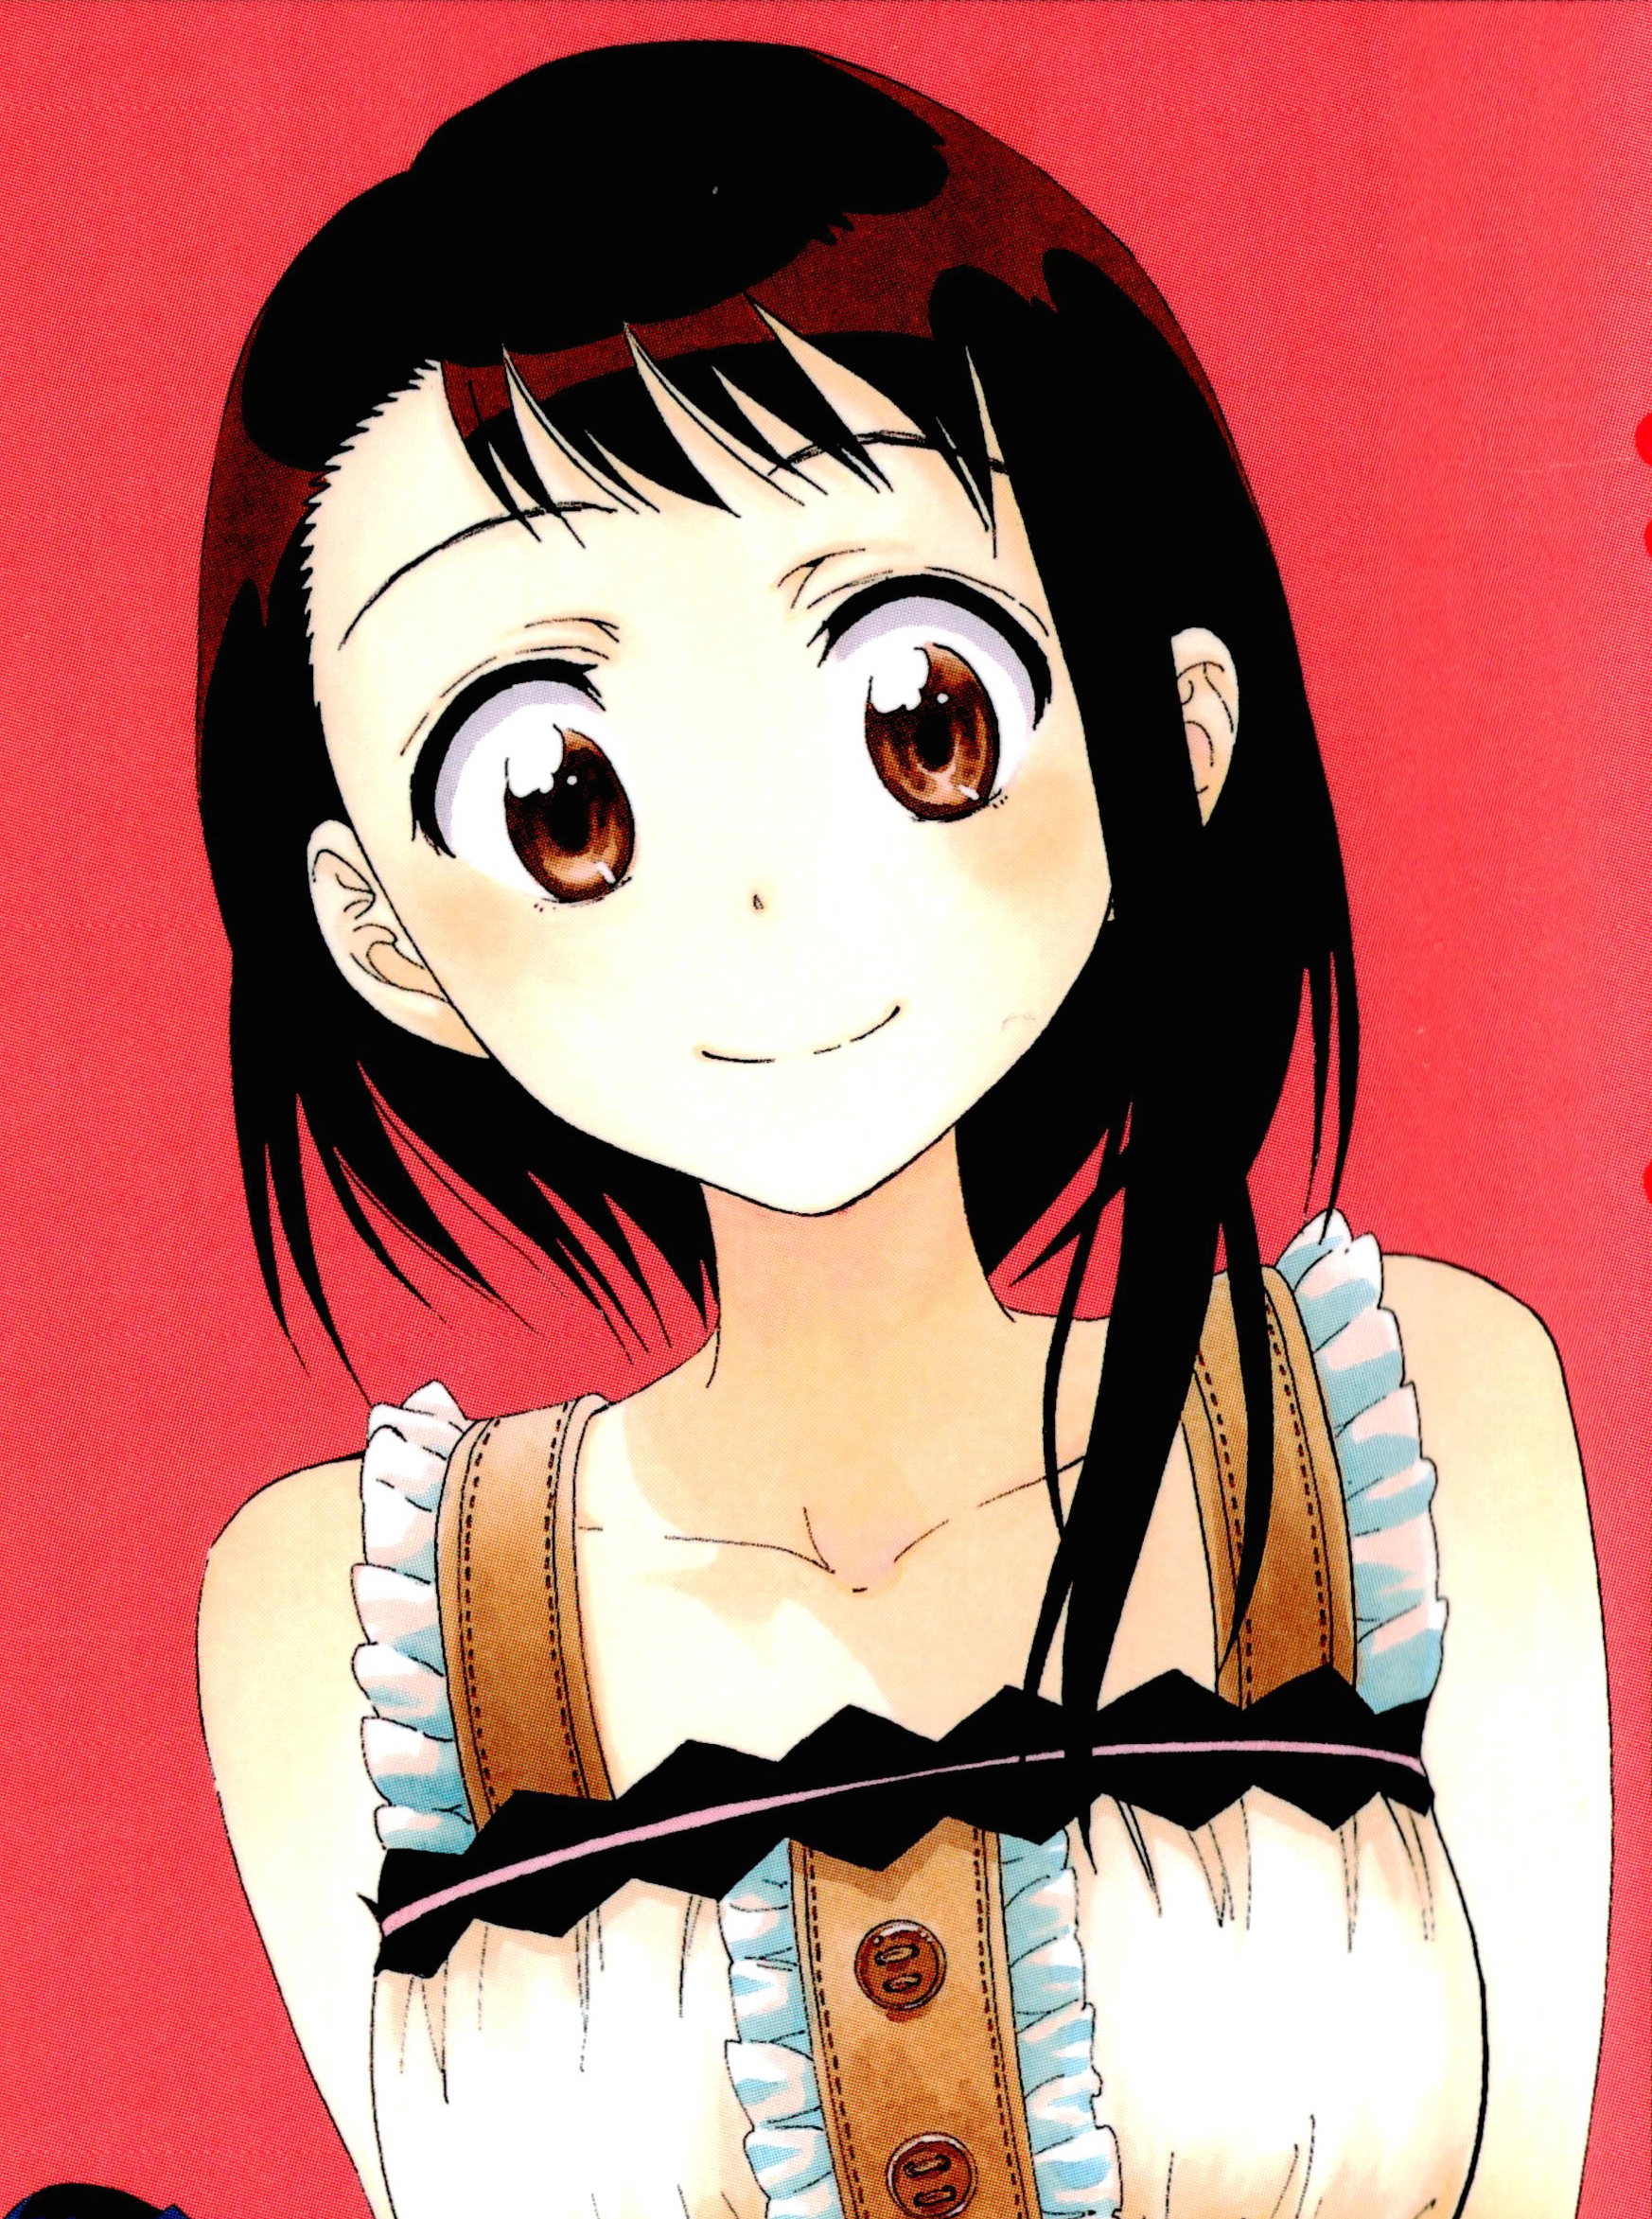 Poster Kosaki Onodera Nisekoi False Love Card Anime